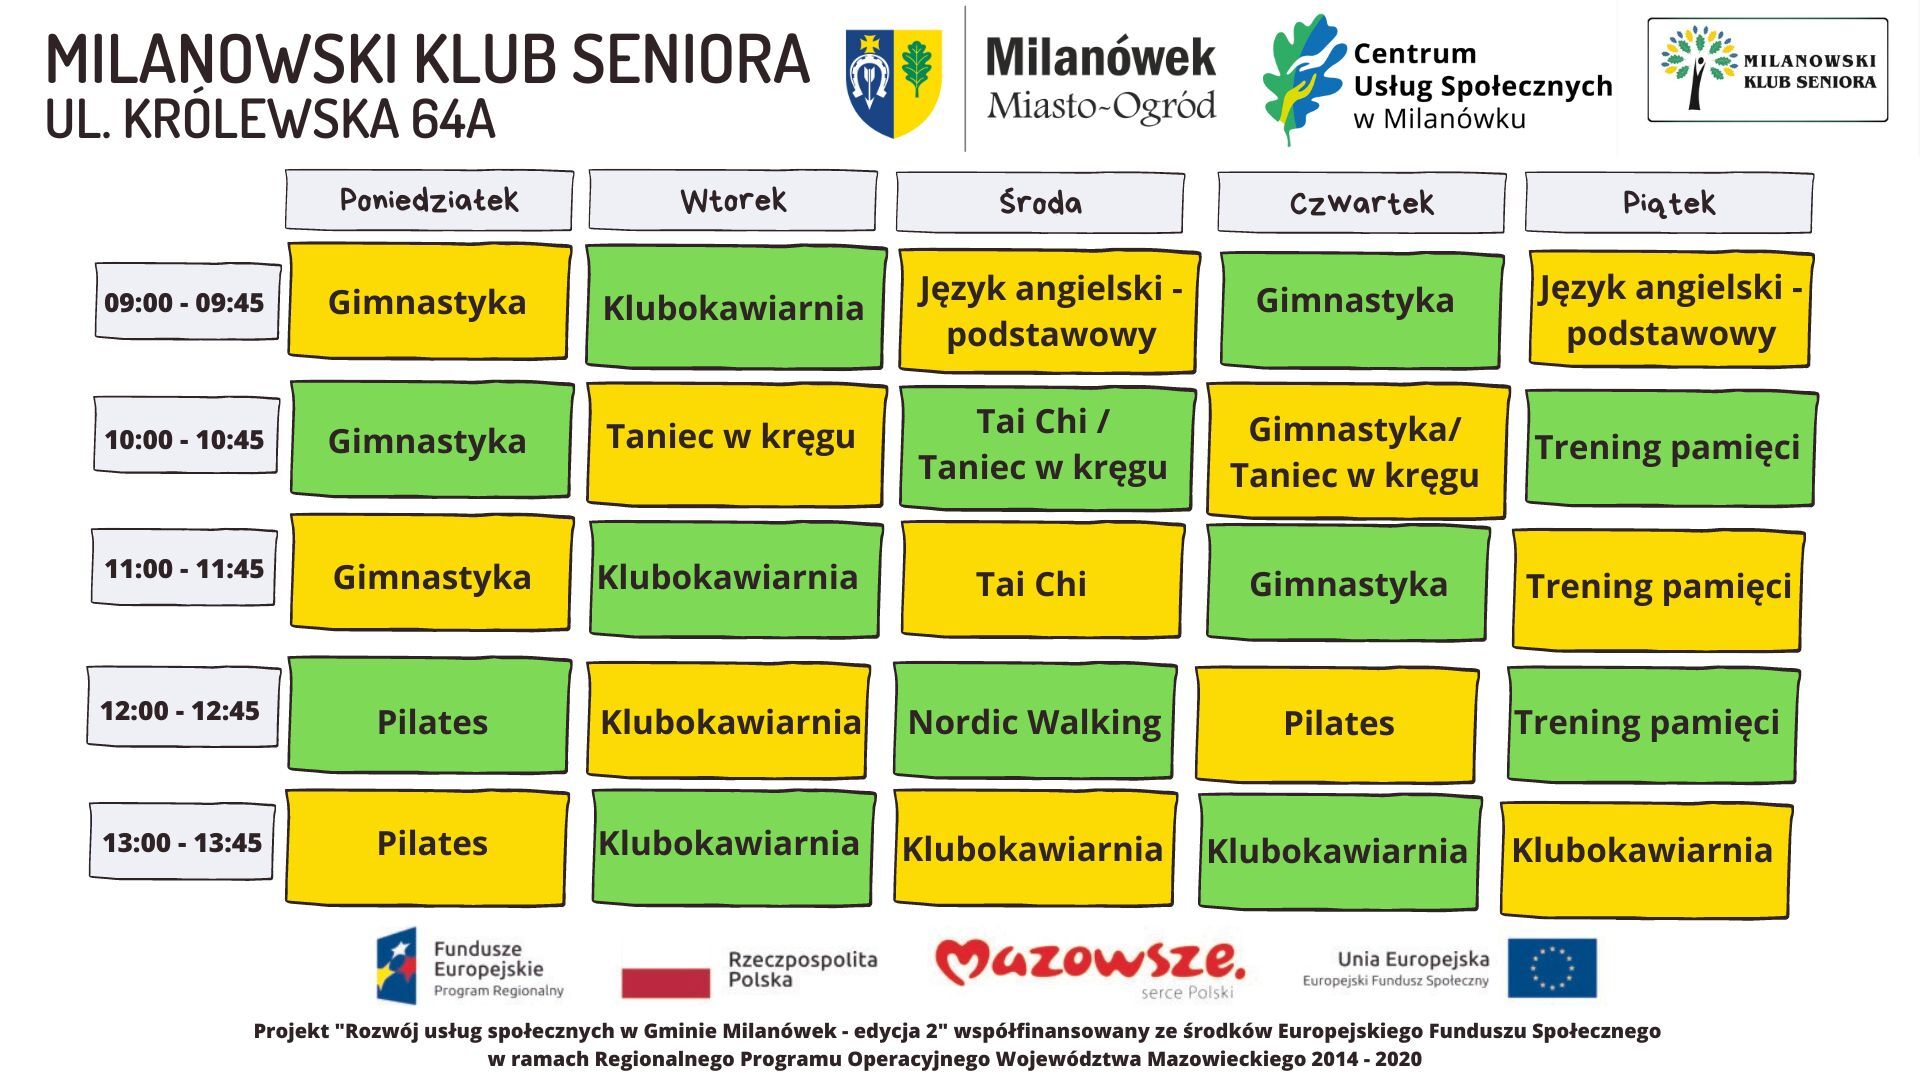 Harmonogram Milanowskiego Klubu Seniora